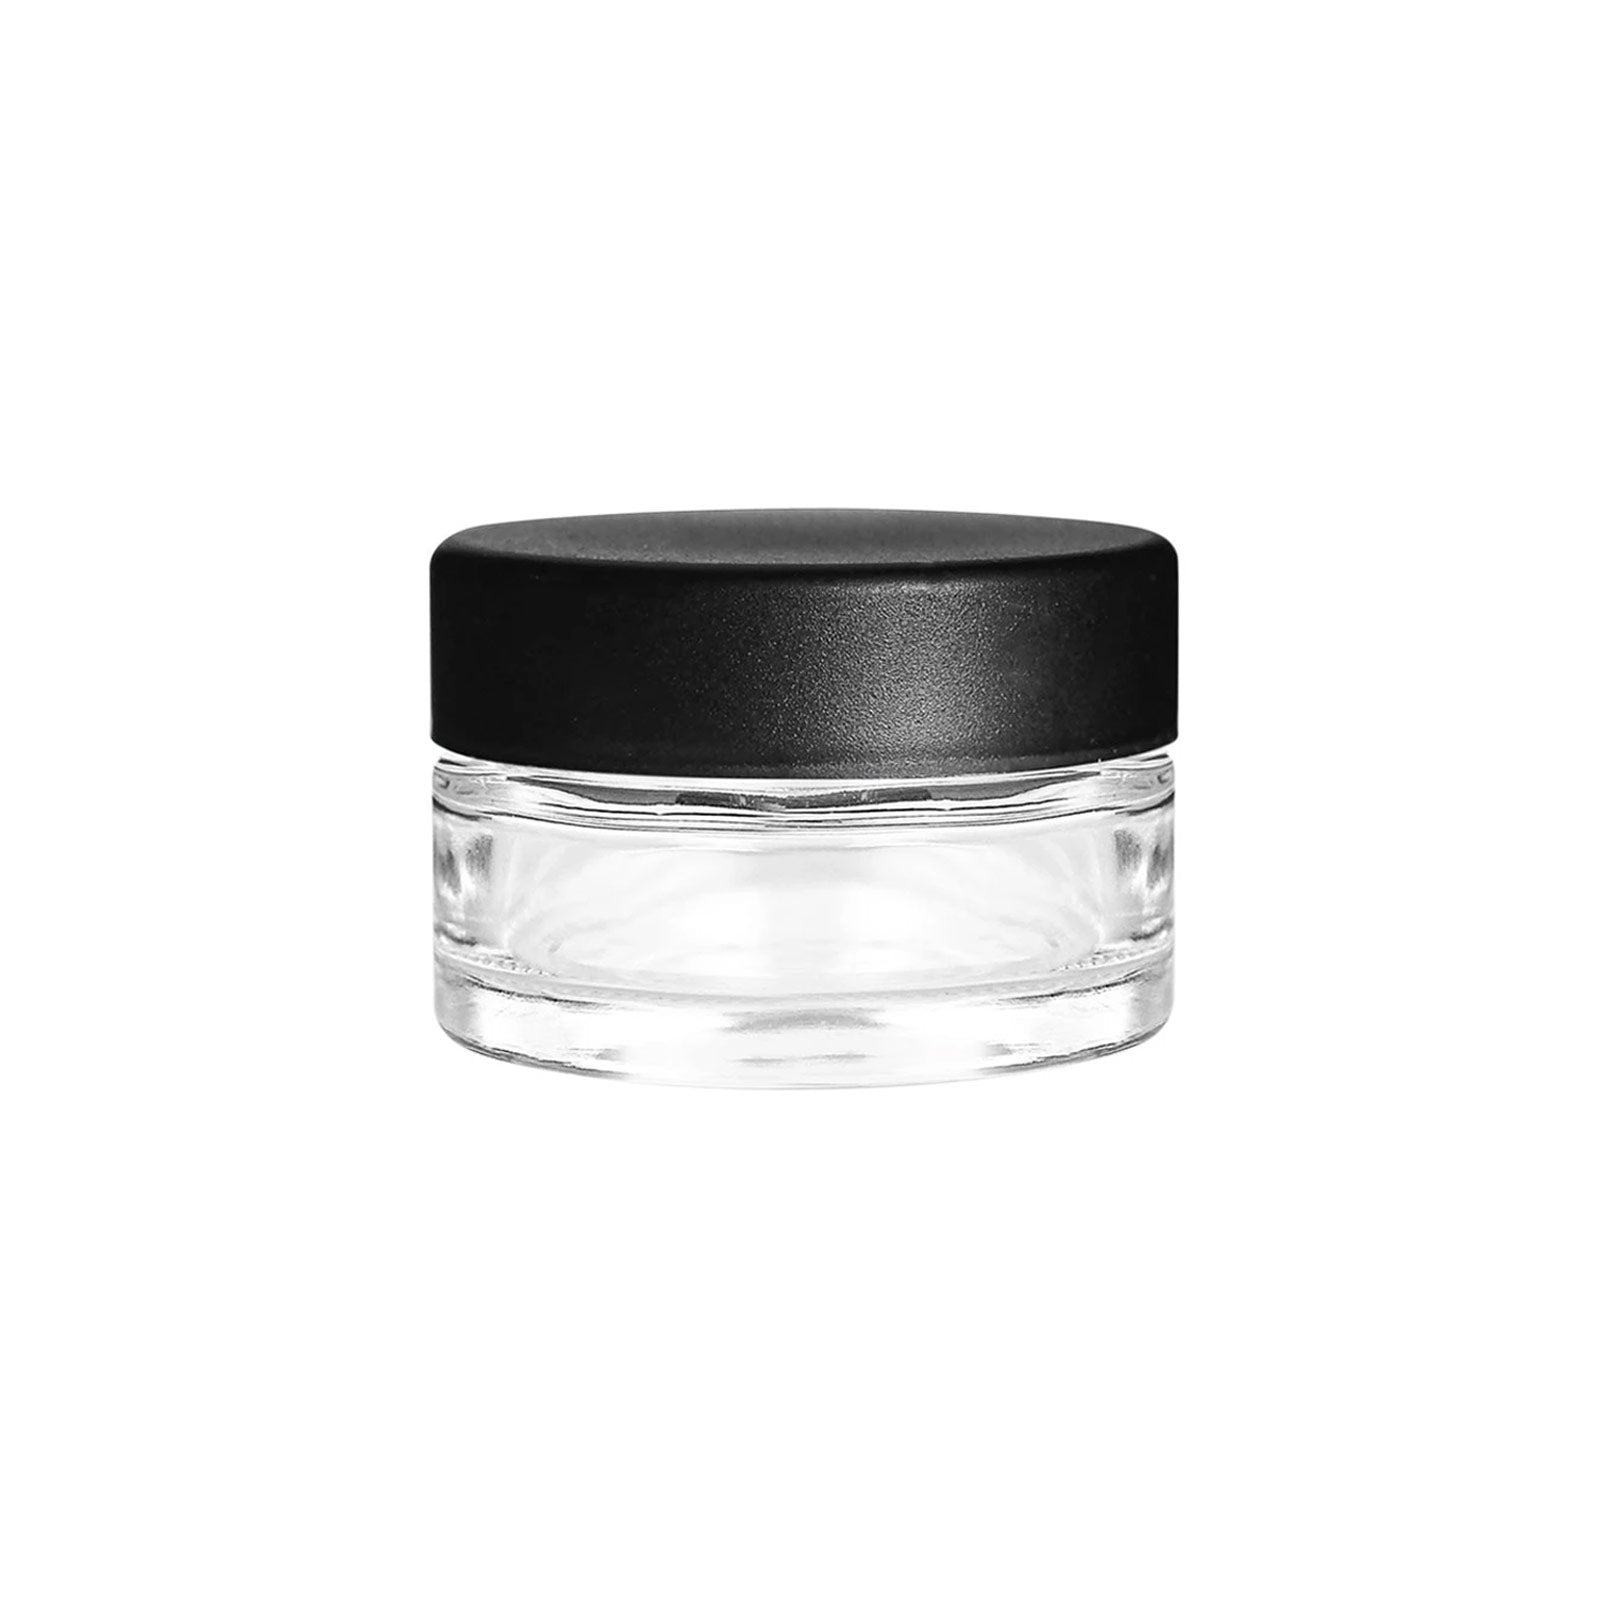 1oz Child Resistant Glass Jars With Black Caps - 1-2 Grams - 1 Count